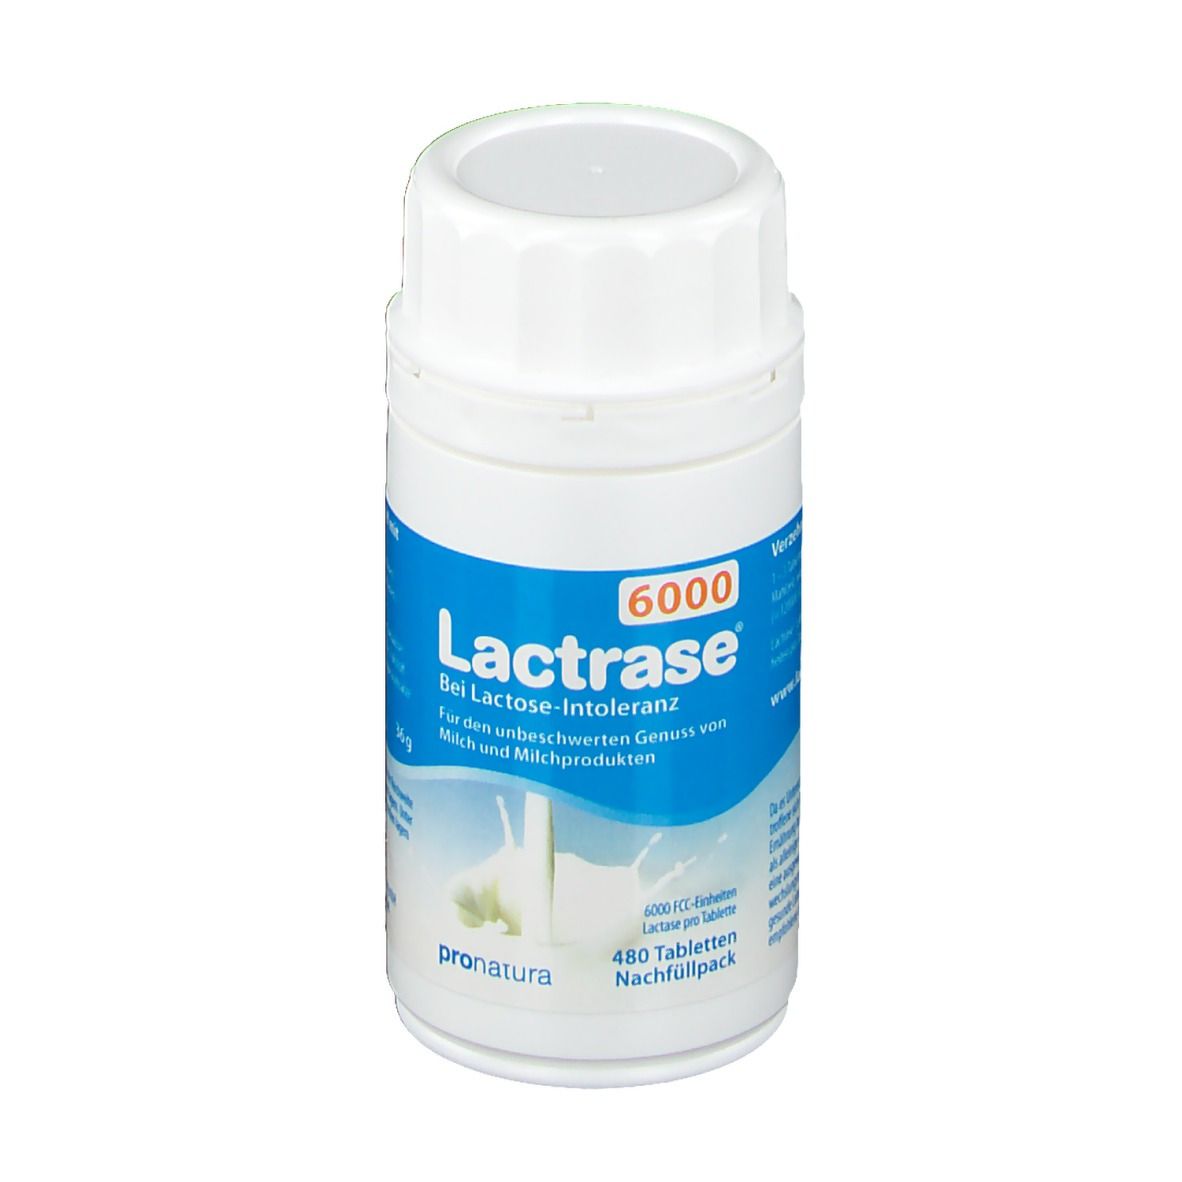 Image of Lactrase® 6000 FCC Tabletten Klickspender Nachfüllpack